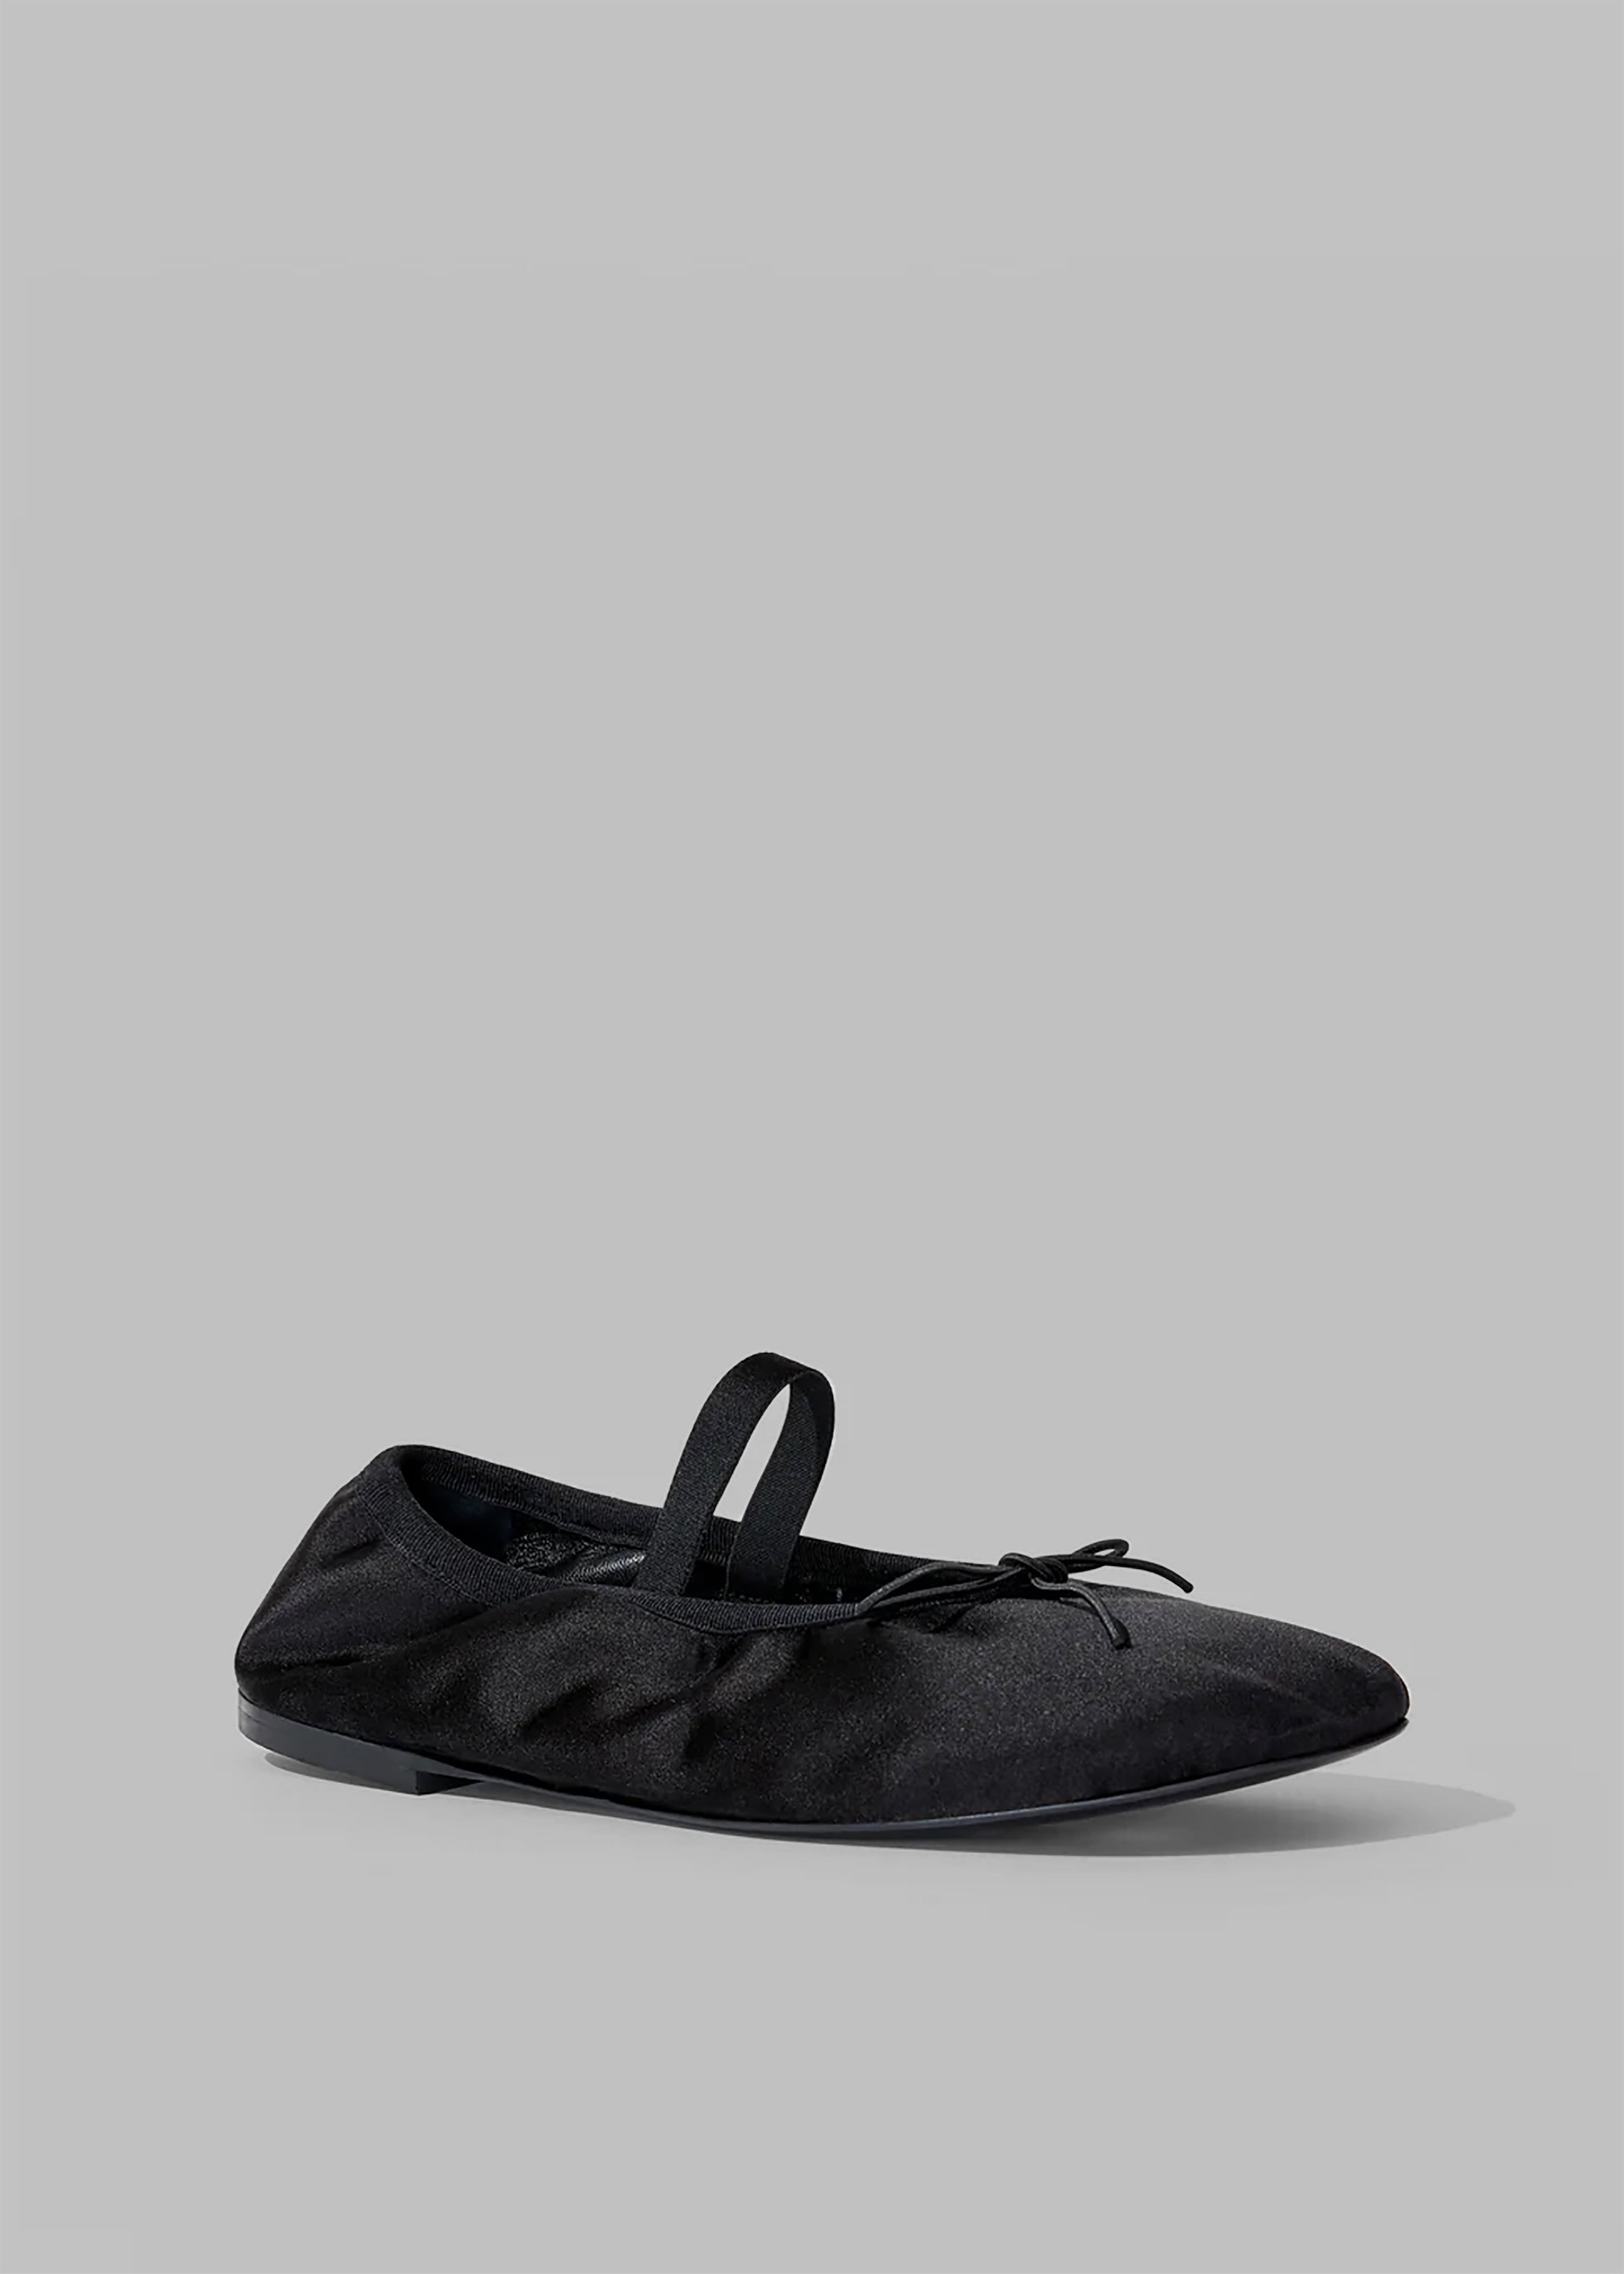 Proenza Schouler Glove Ballet Flats - Black - 2